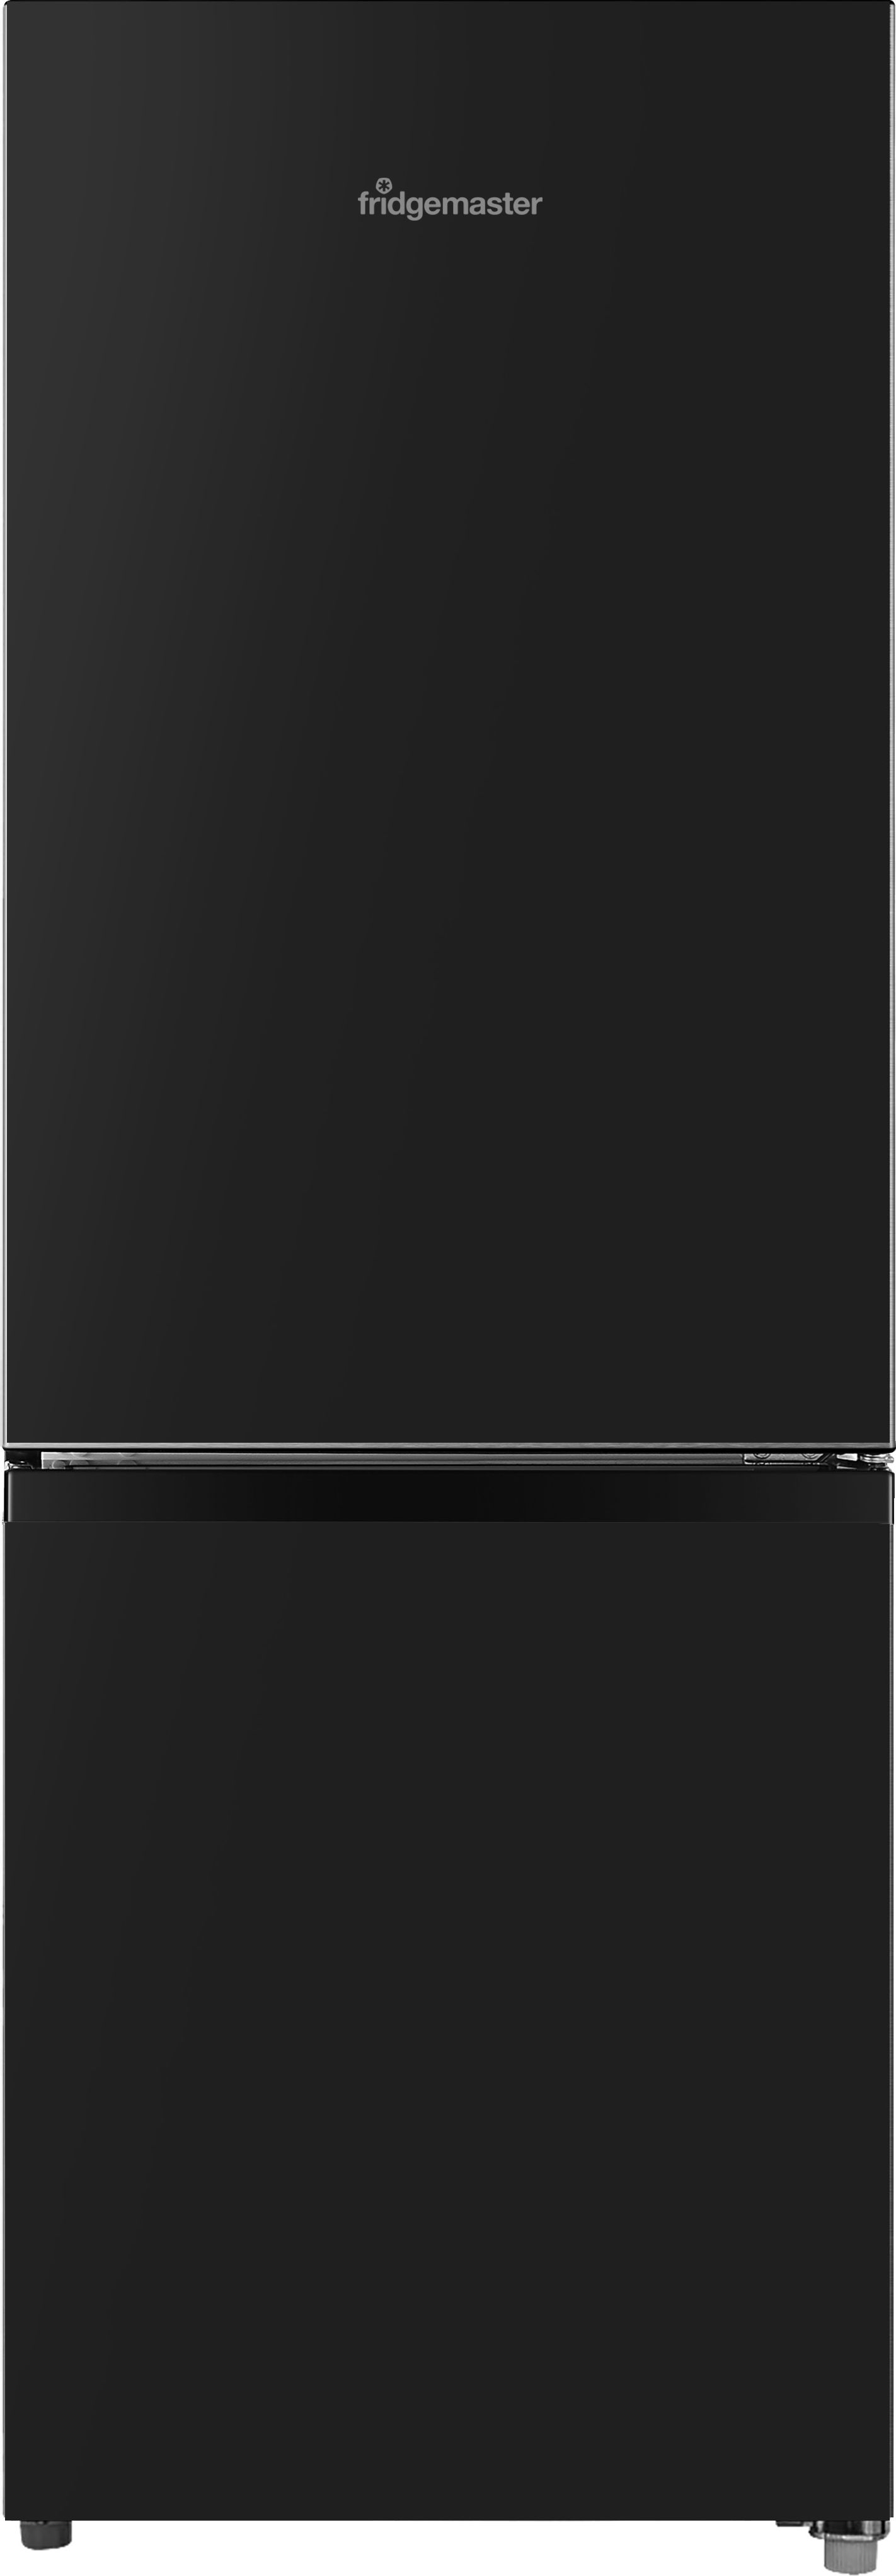 Fridgemaster MC50165EB Compact 143cm High Fridge Freezer - Black - E Rated Black